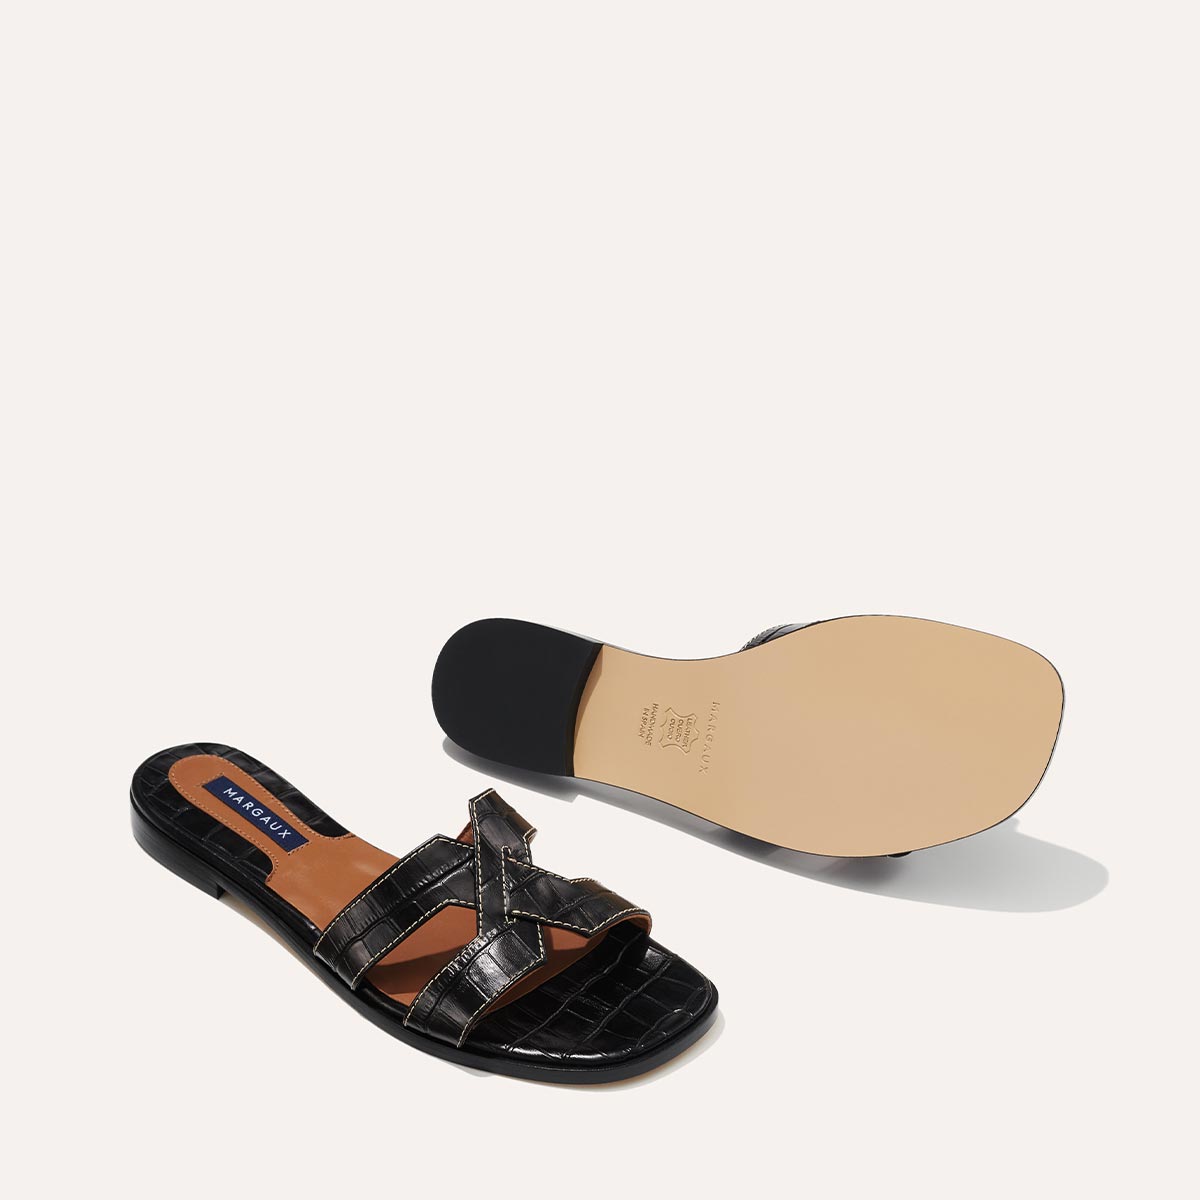 Black Crocodile Sandals - Cute Slide Sandals - Square Toe Sandals - Lulus